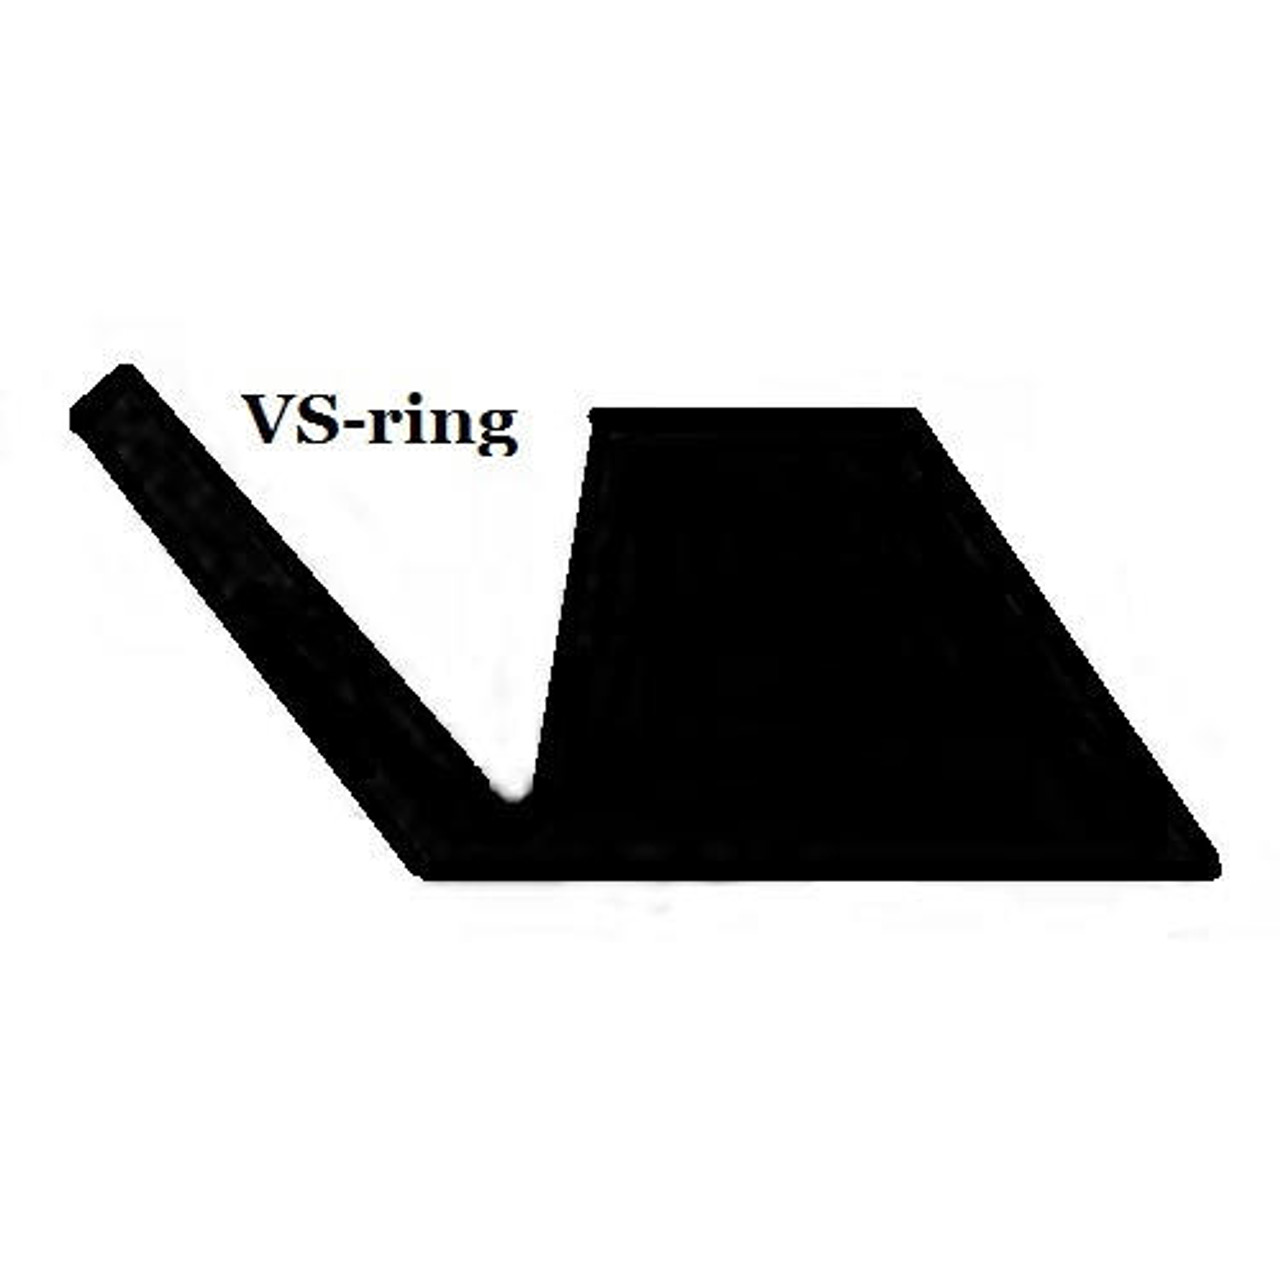 VS-ring 199mm NBR  Price for 1 pc